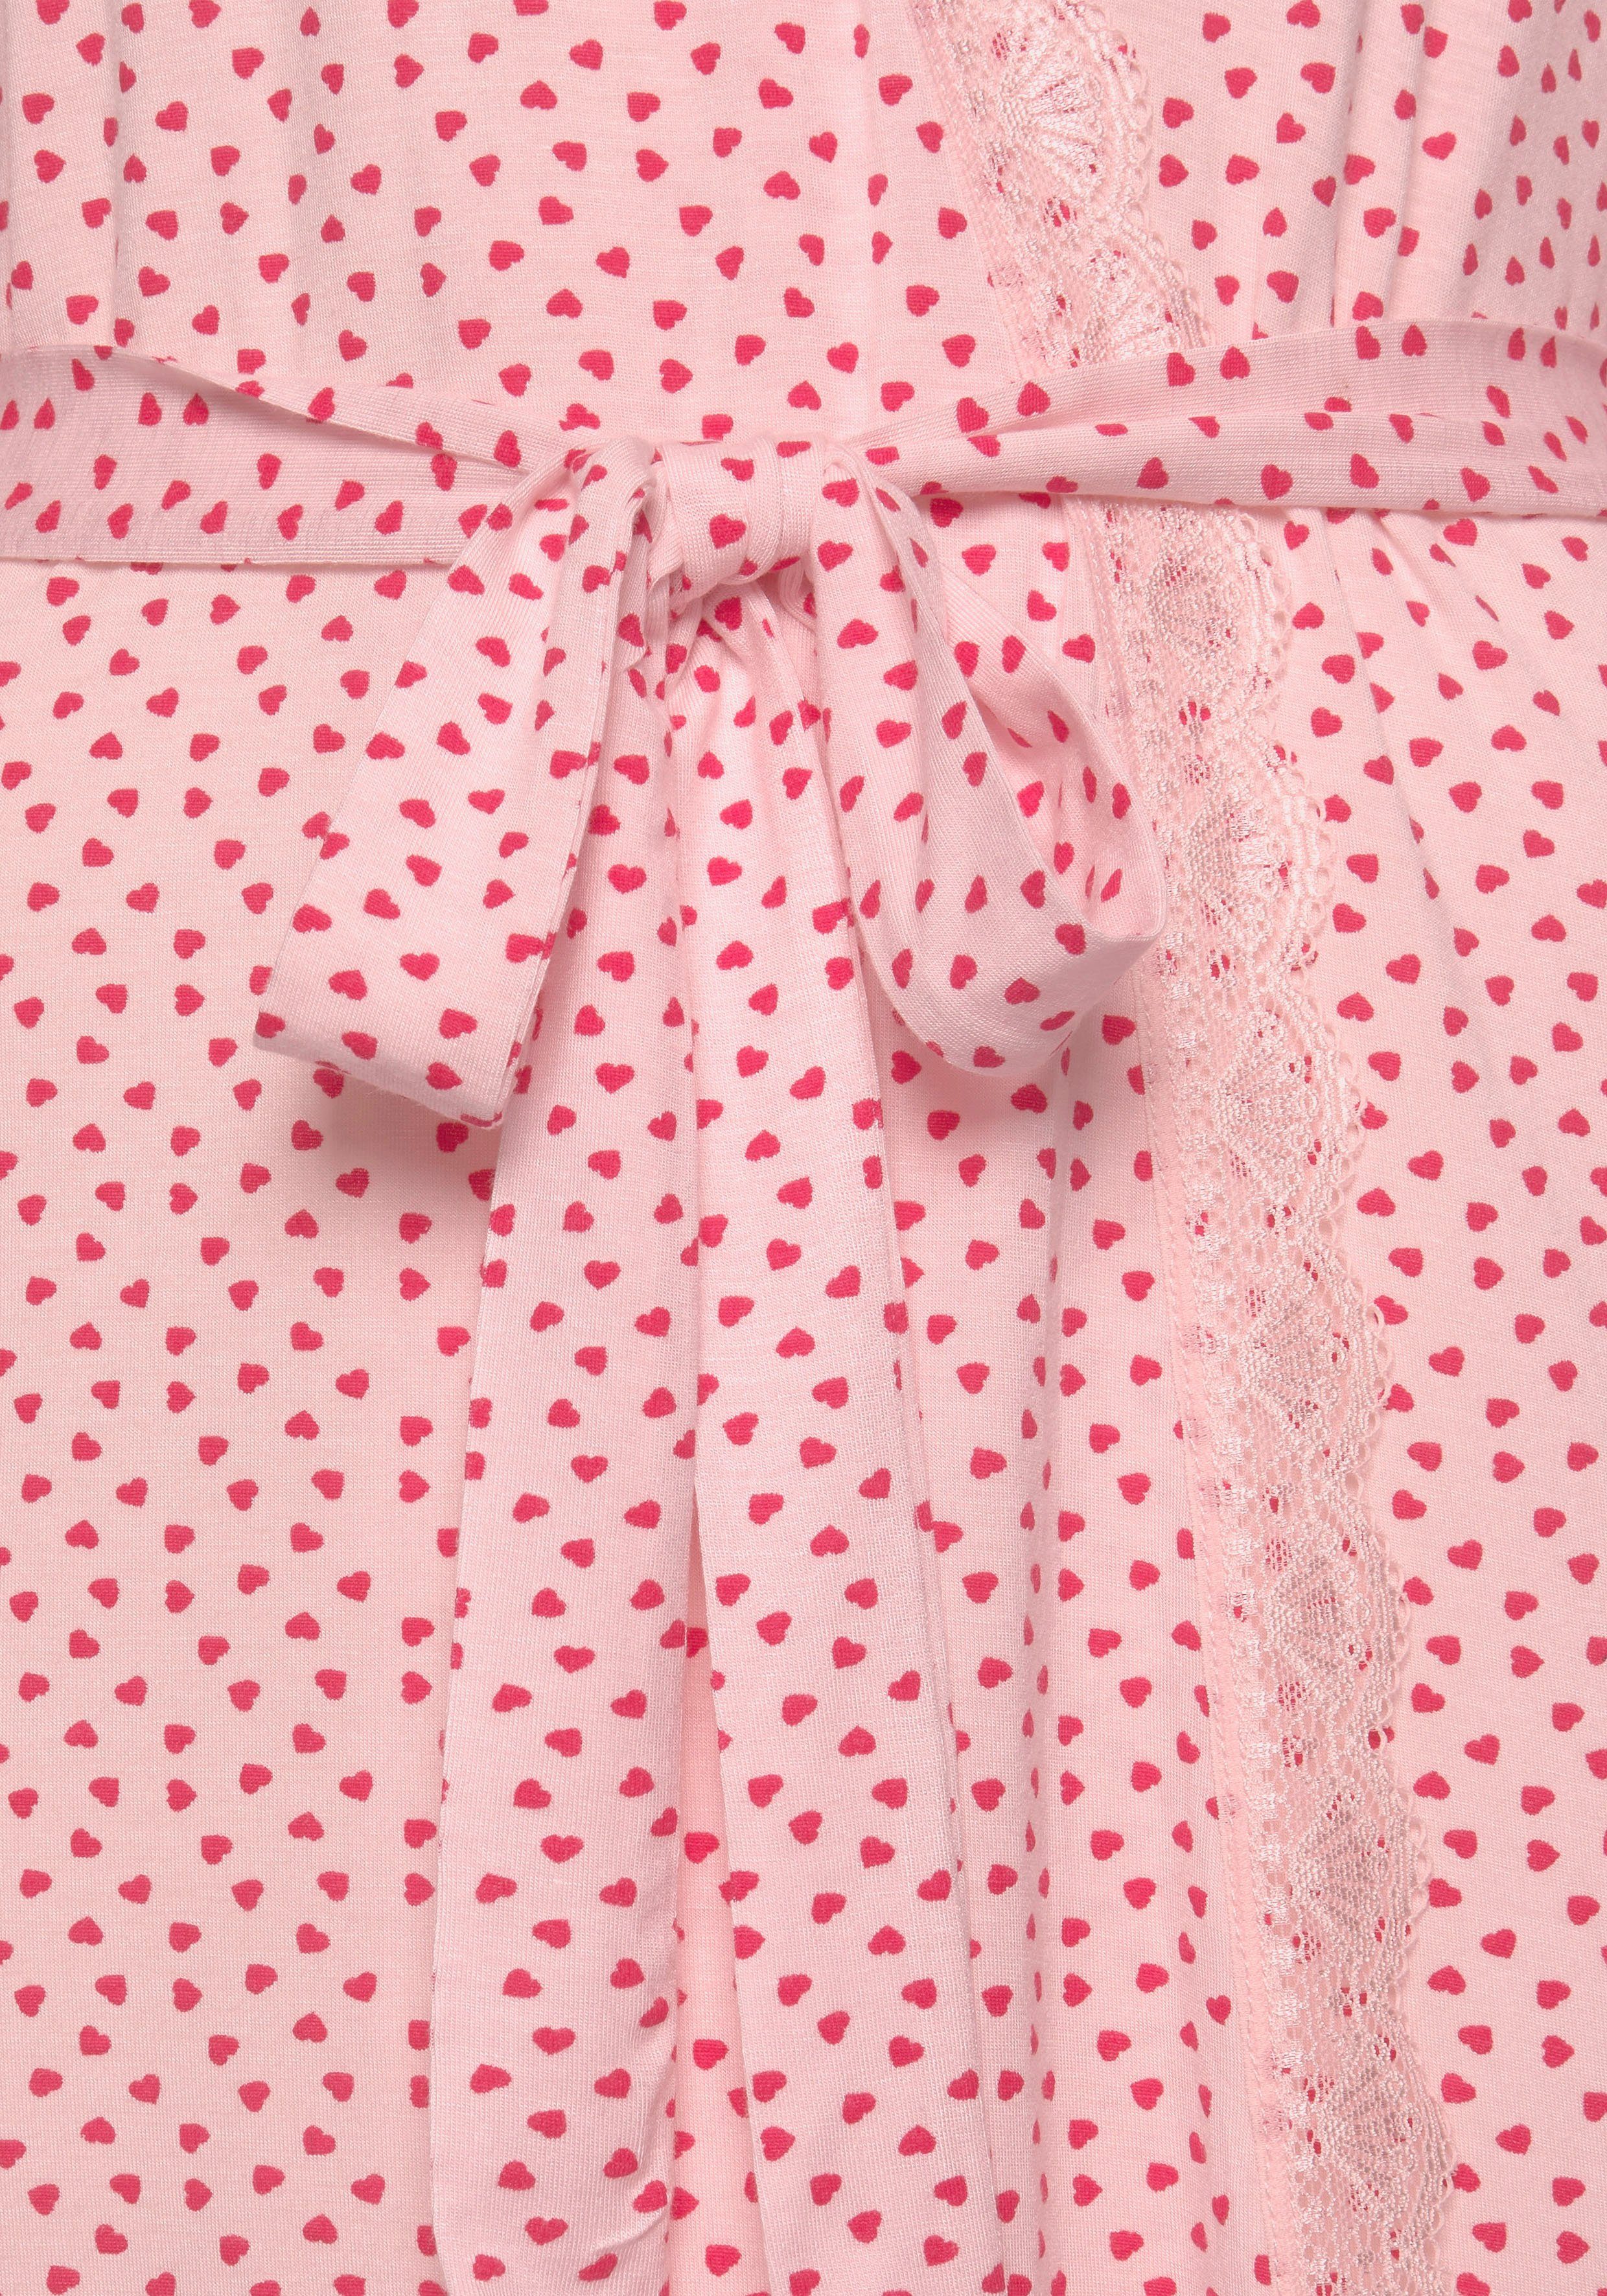 und Gürtel, Single-Jersey, hellrosa-gemustert Kurzform, s.Oliver Kimono, Herzchendruck Spitze mit